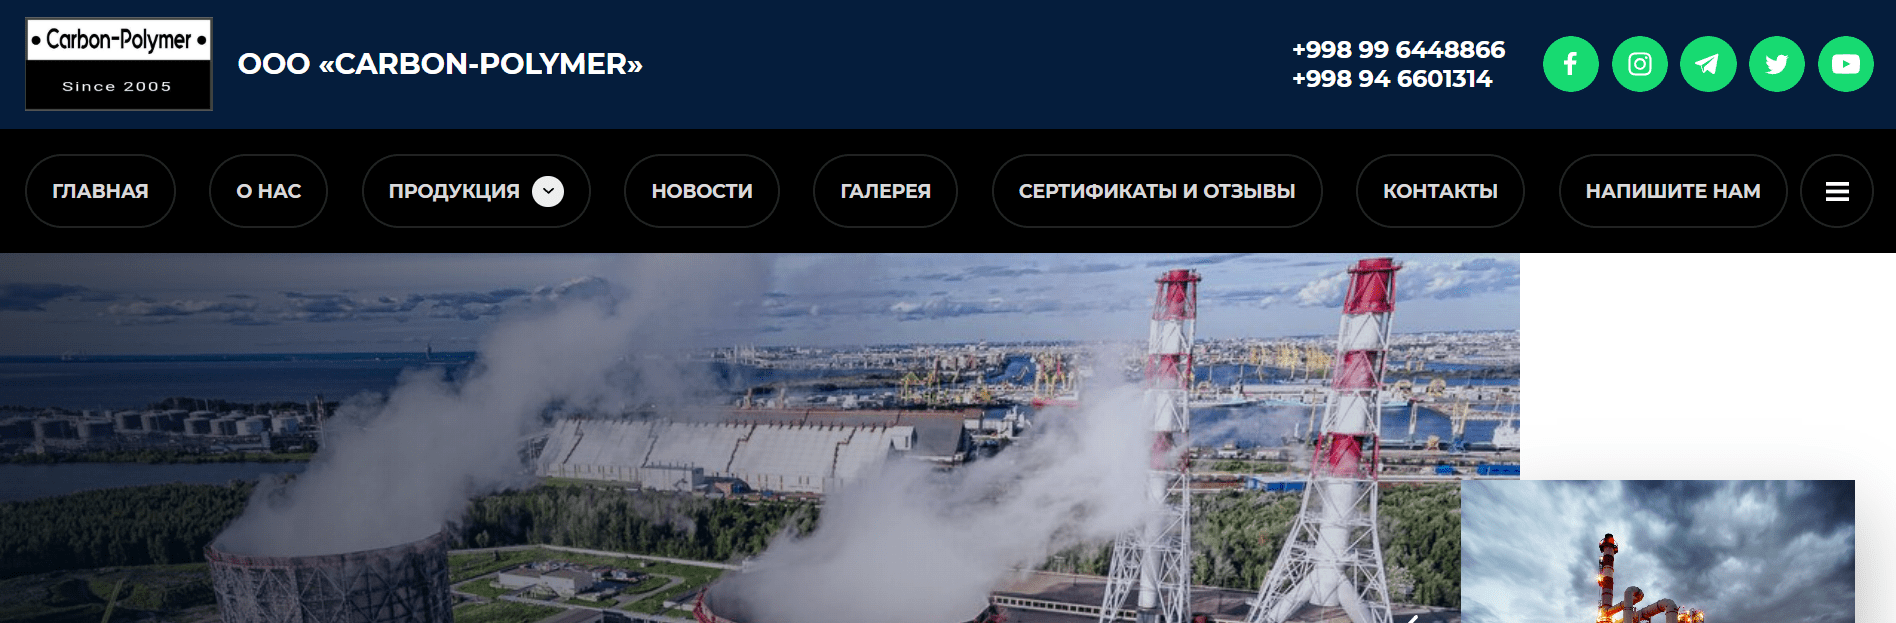 CARBON-POLYMER (uzkva.com) - официальный сайт